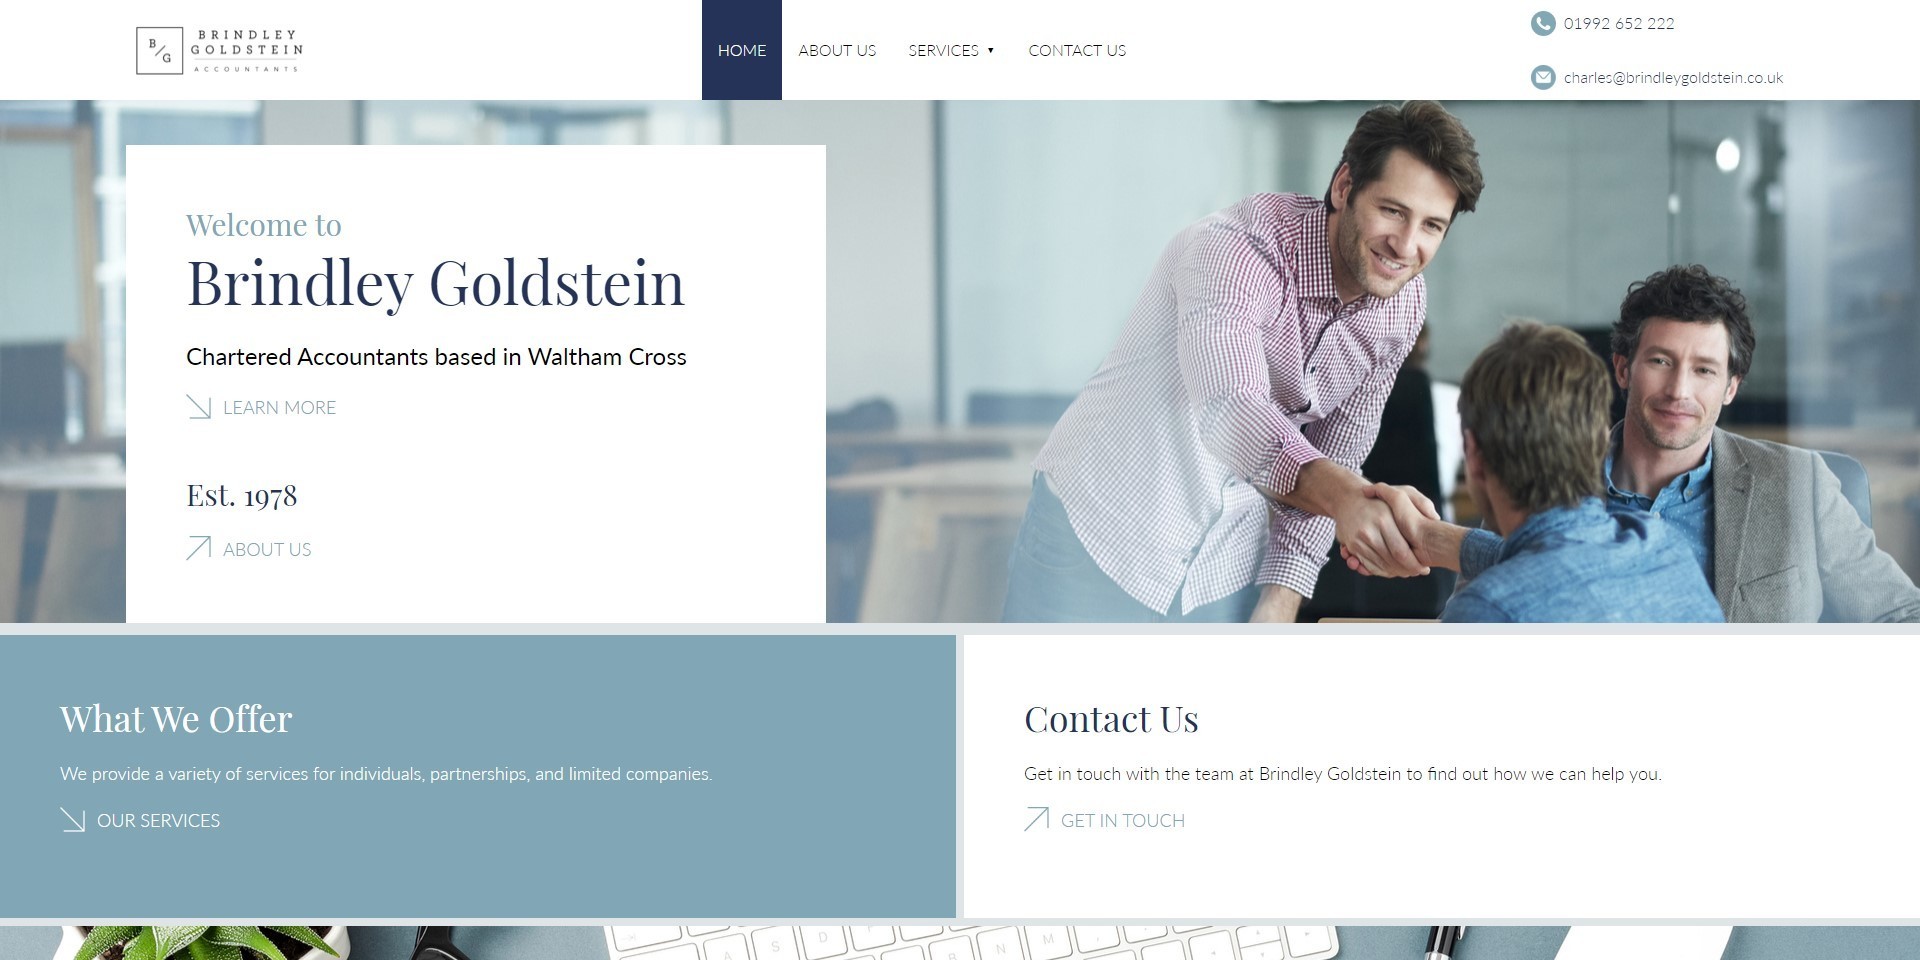 The new Brindley Goldstein website designed by it'seeze, displayed on desktop